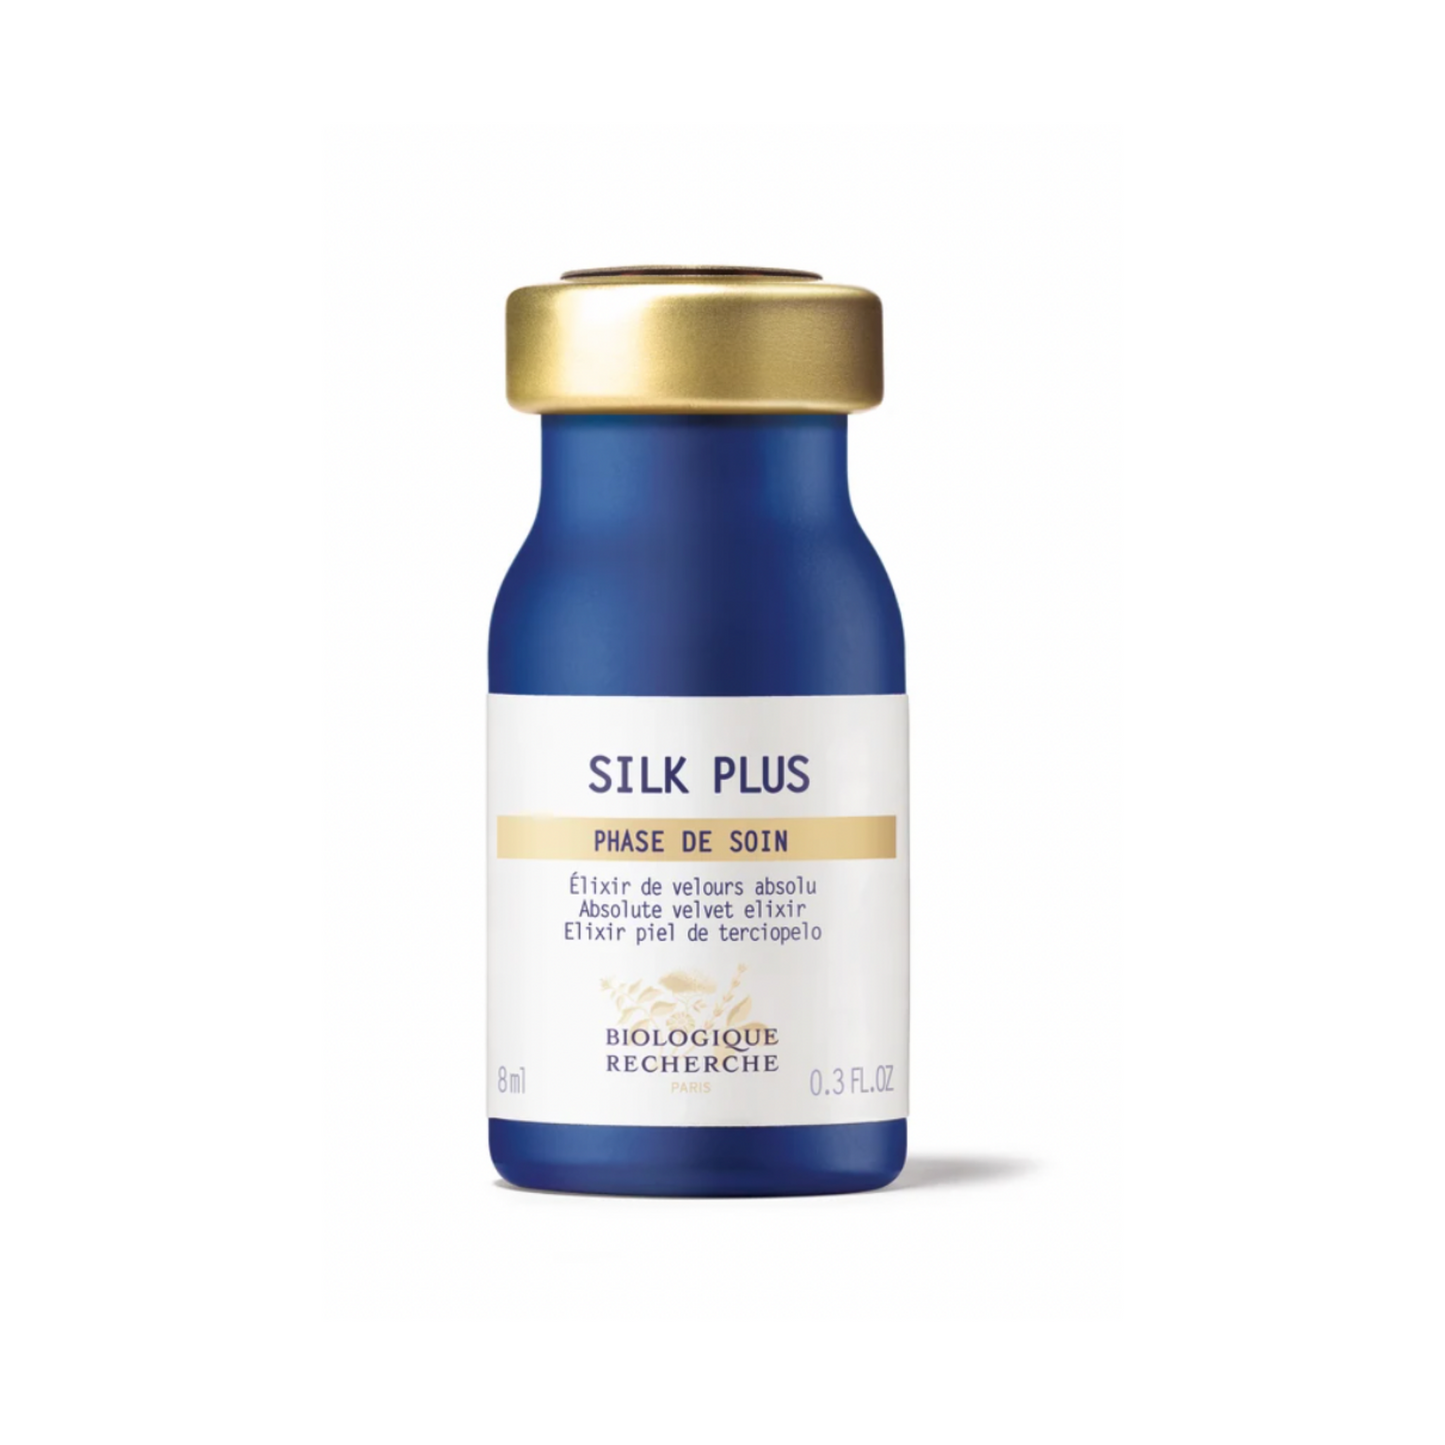 Silk Plus: Mattifying and Radiance Boosting Finishing Serum